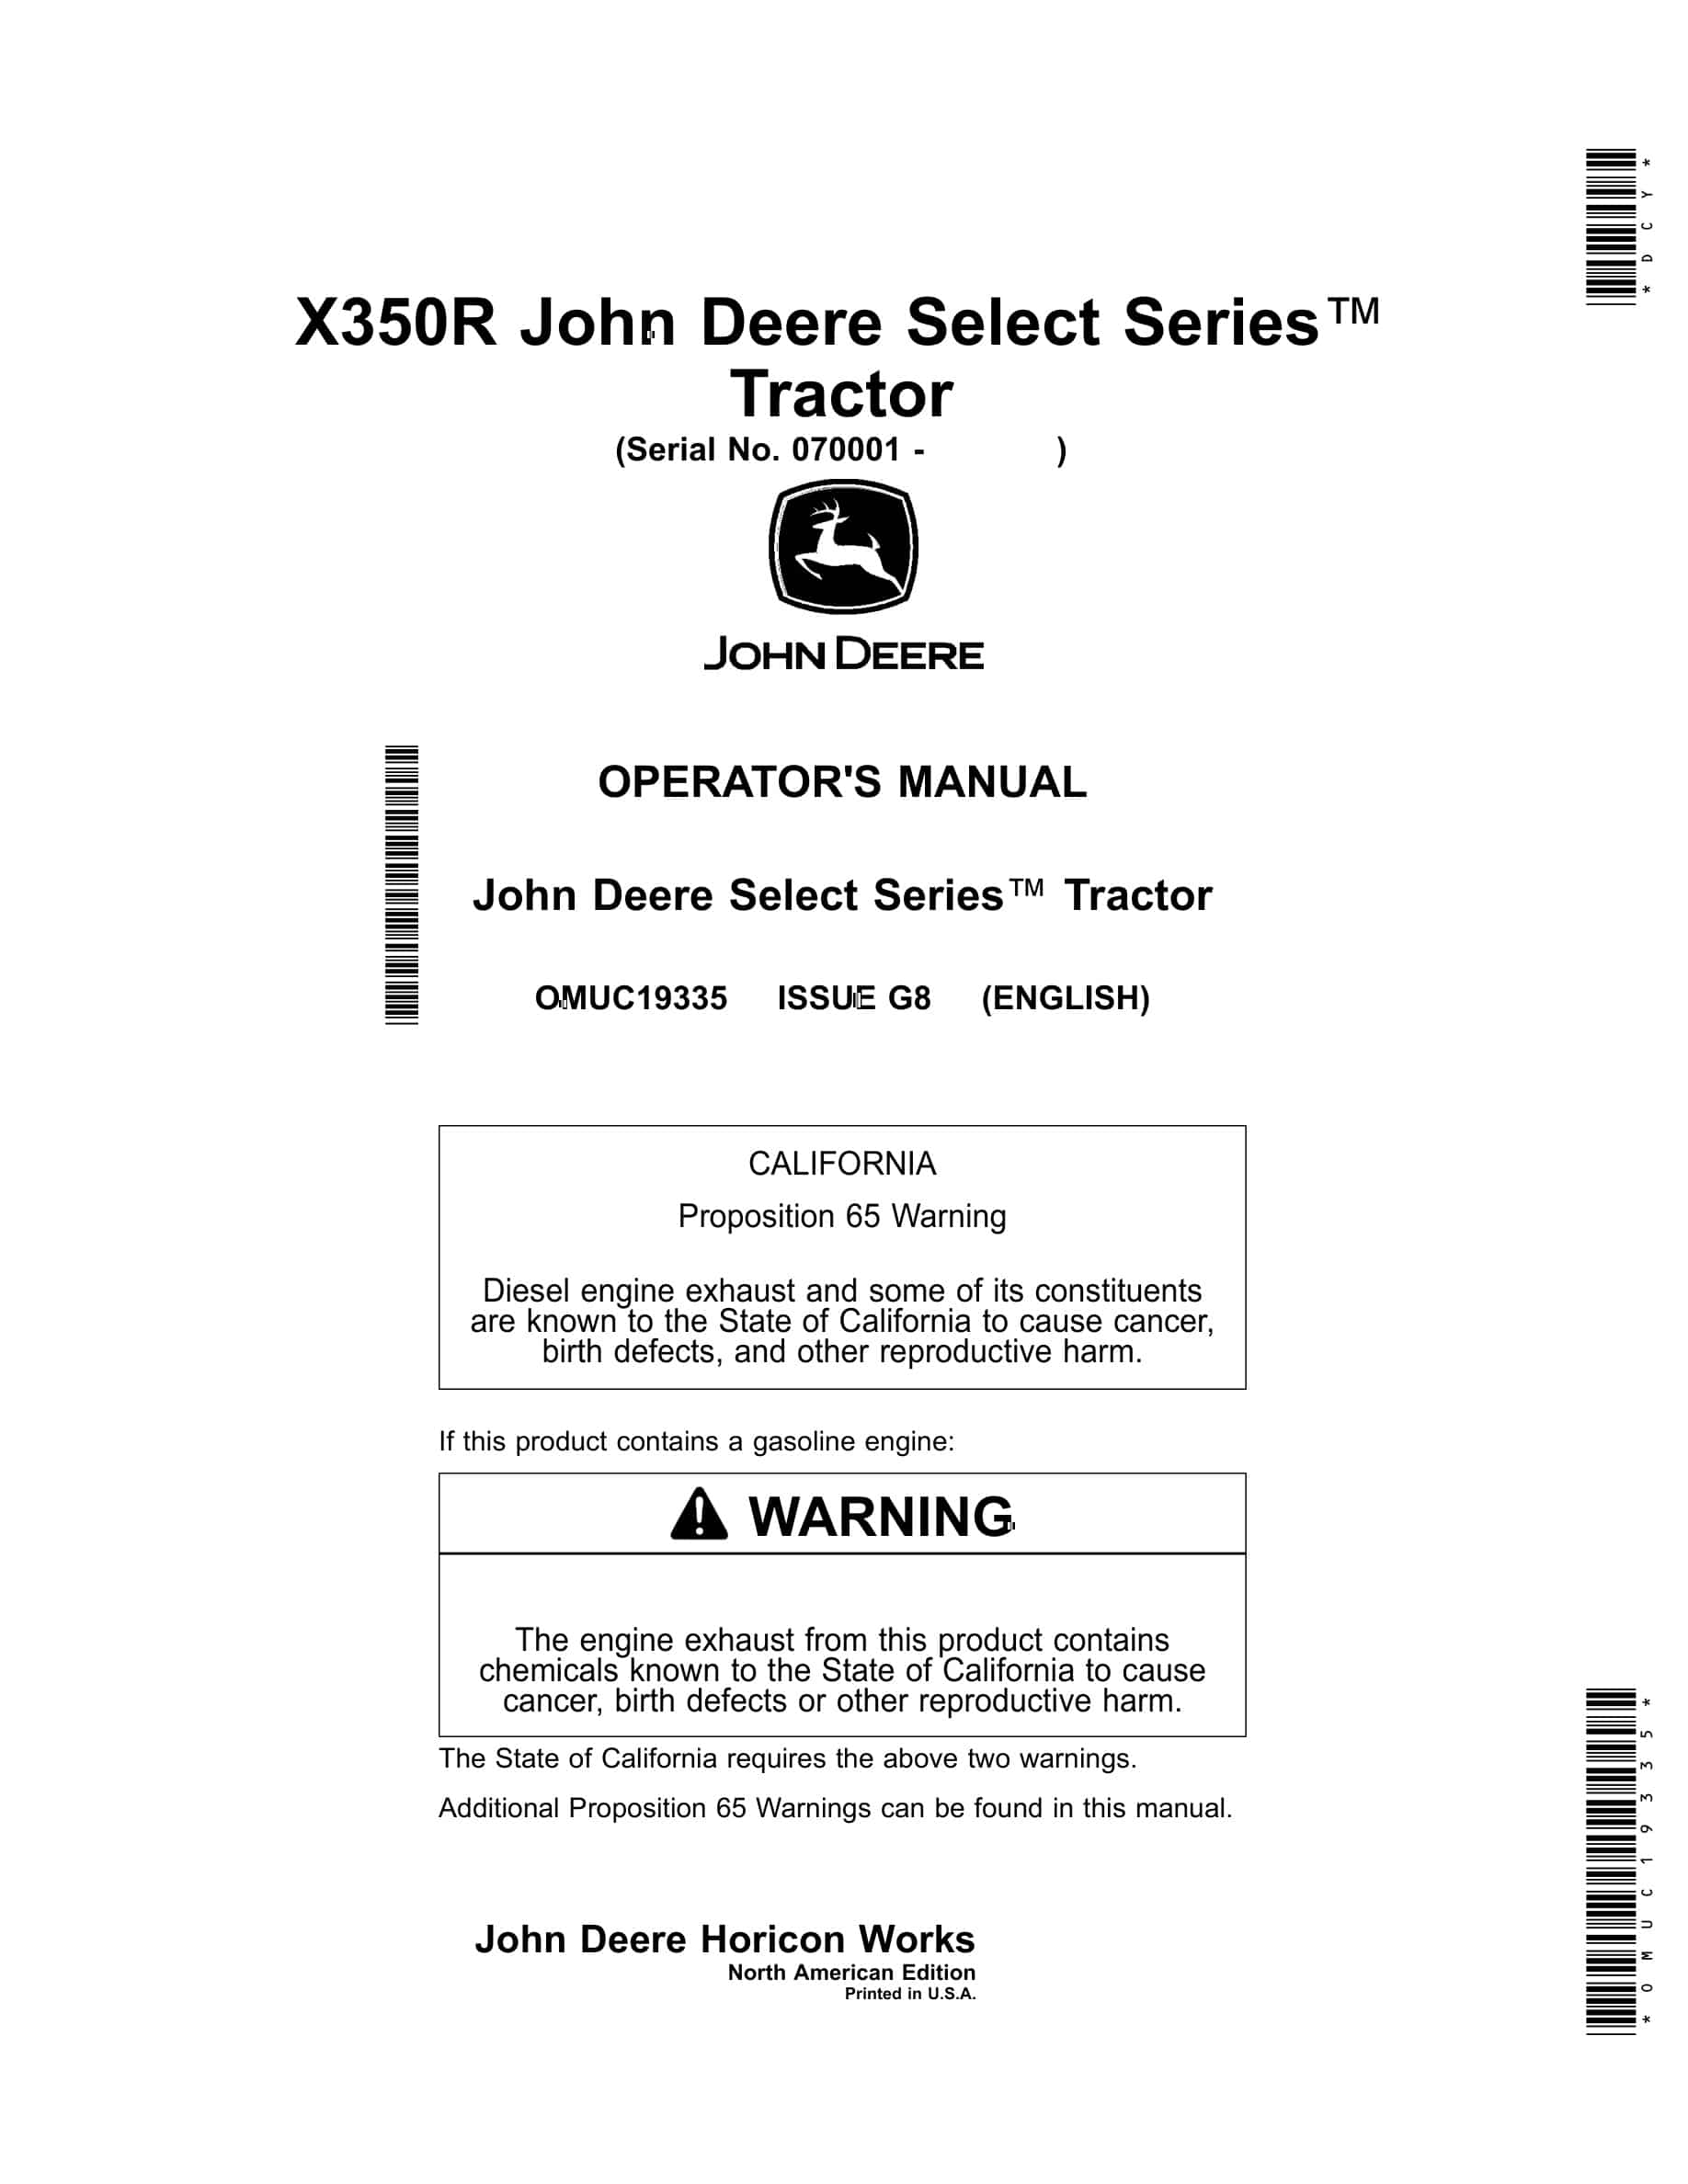 John Deere X350R Tractor Operator Manual OMUC19335-1